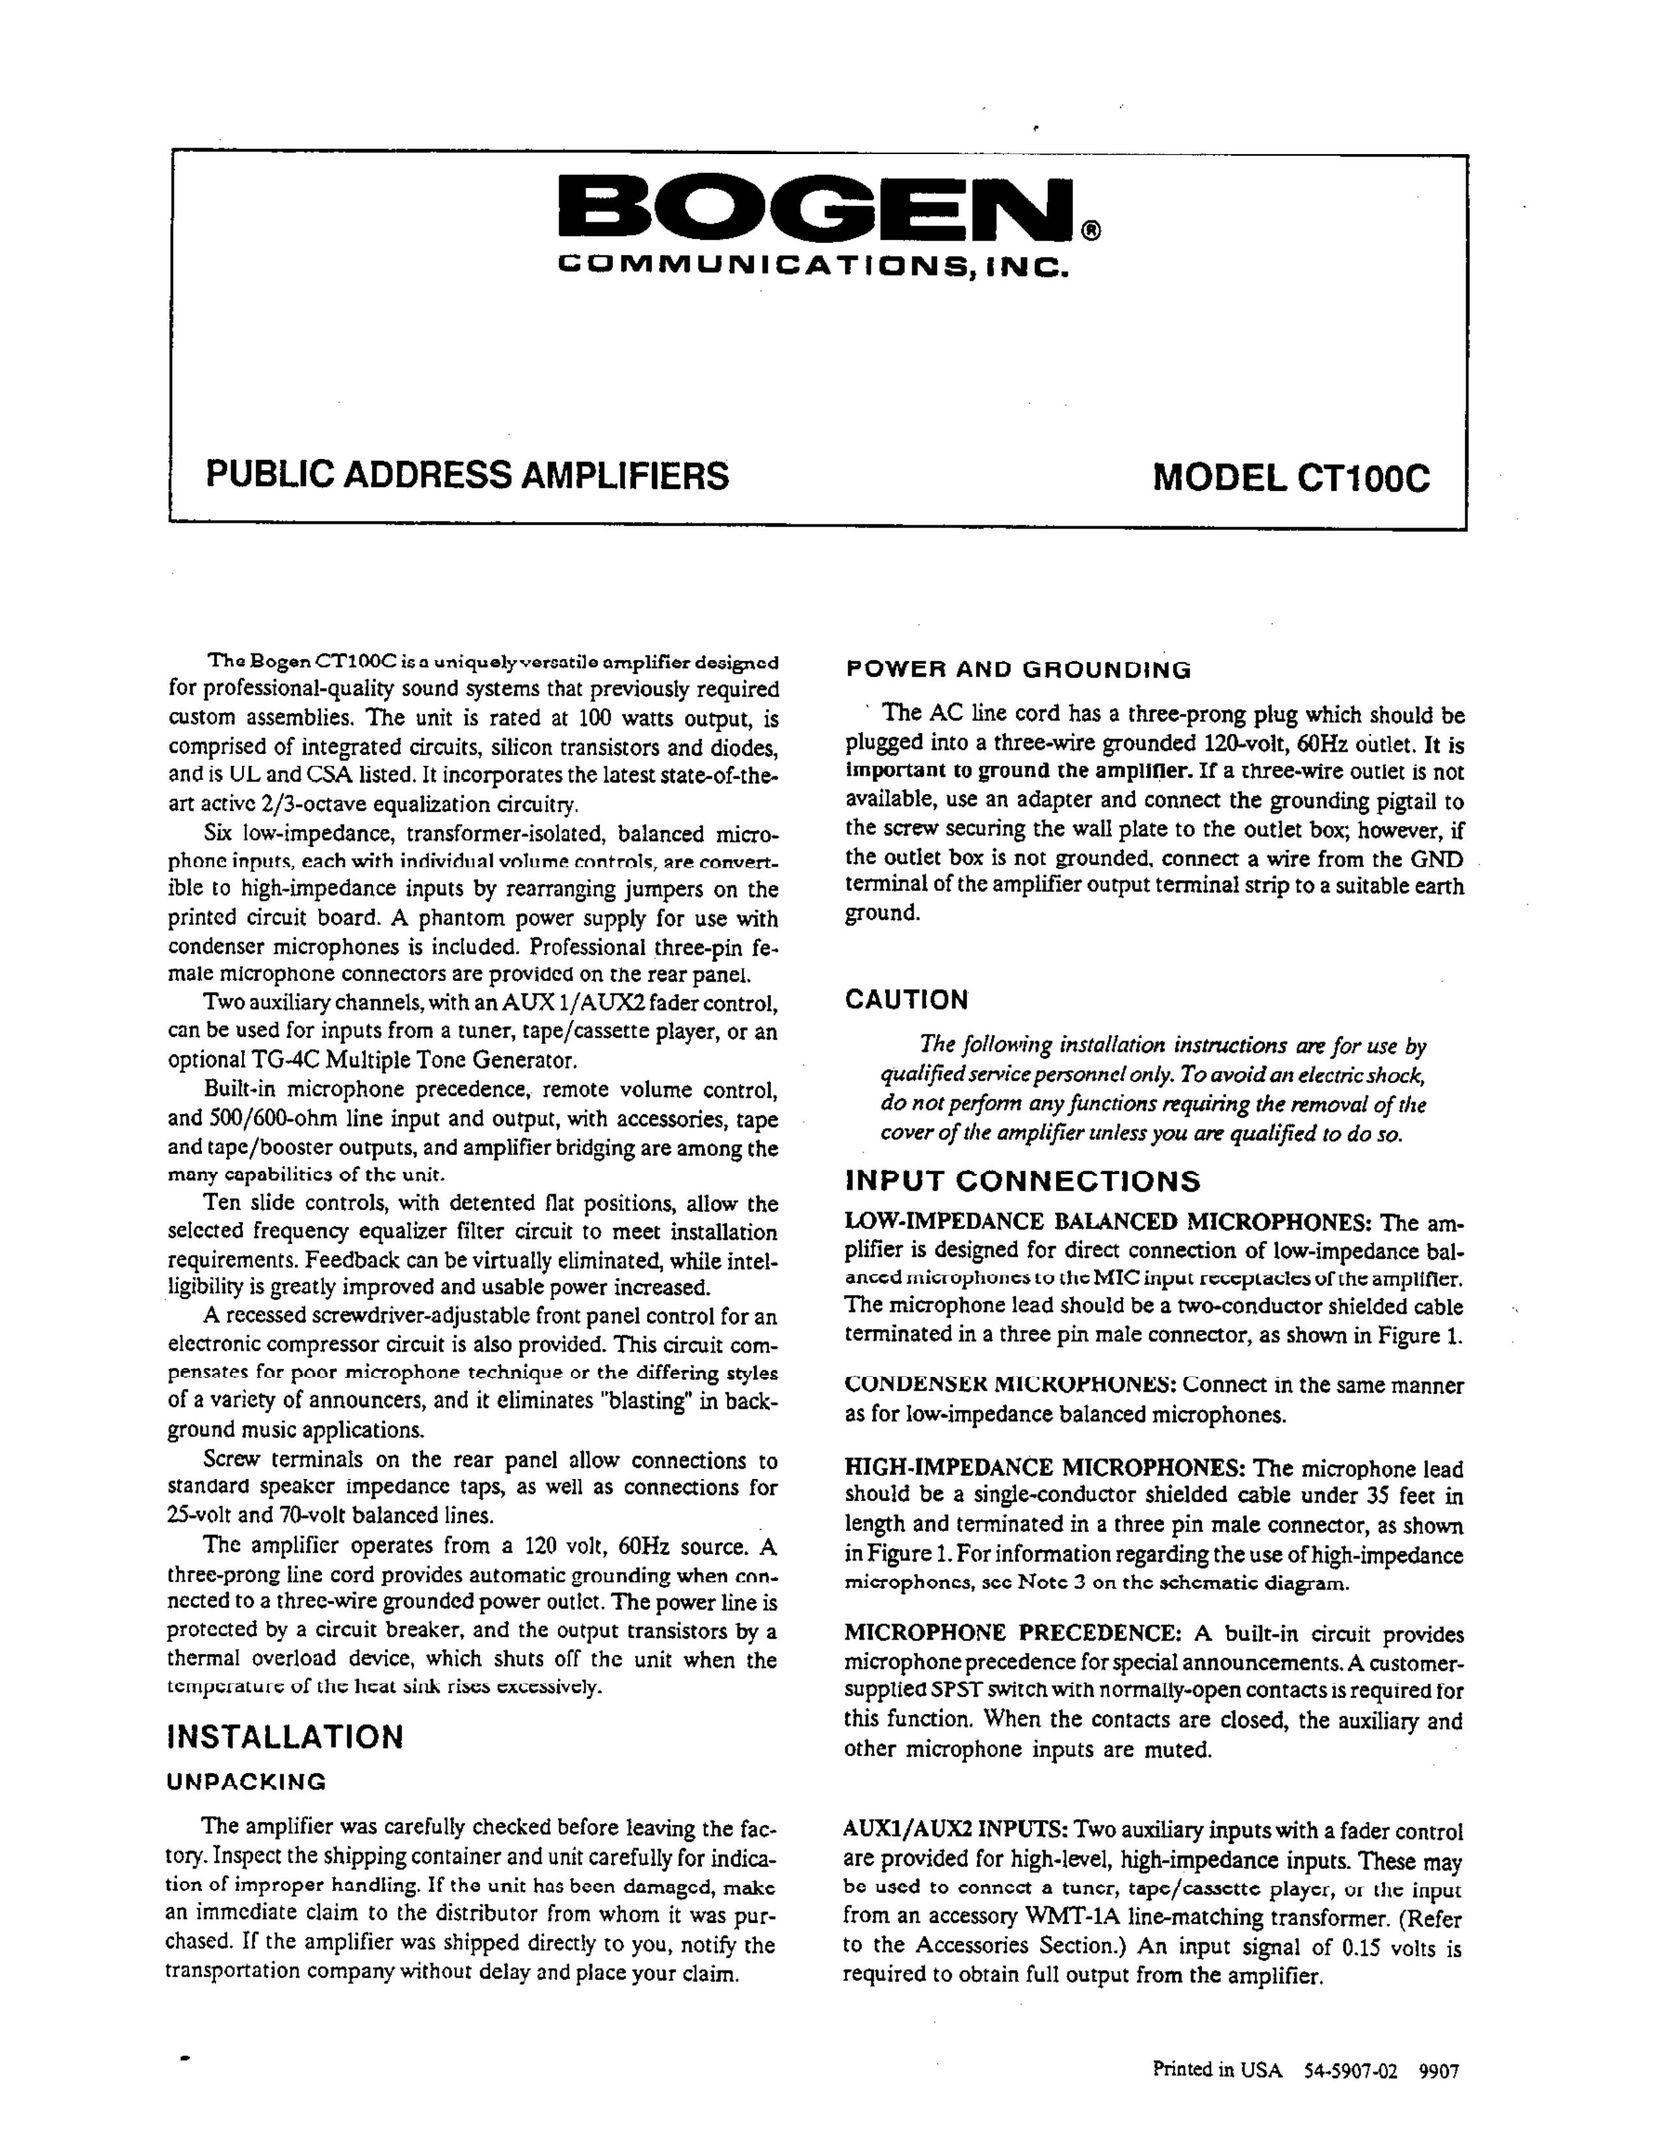 Bogen CT100C Stereo Amplifier User Manual